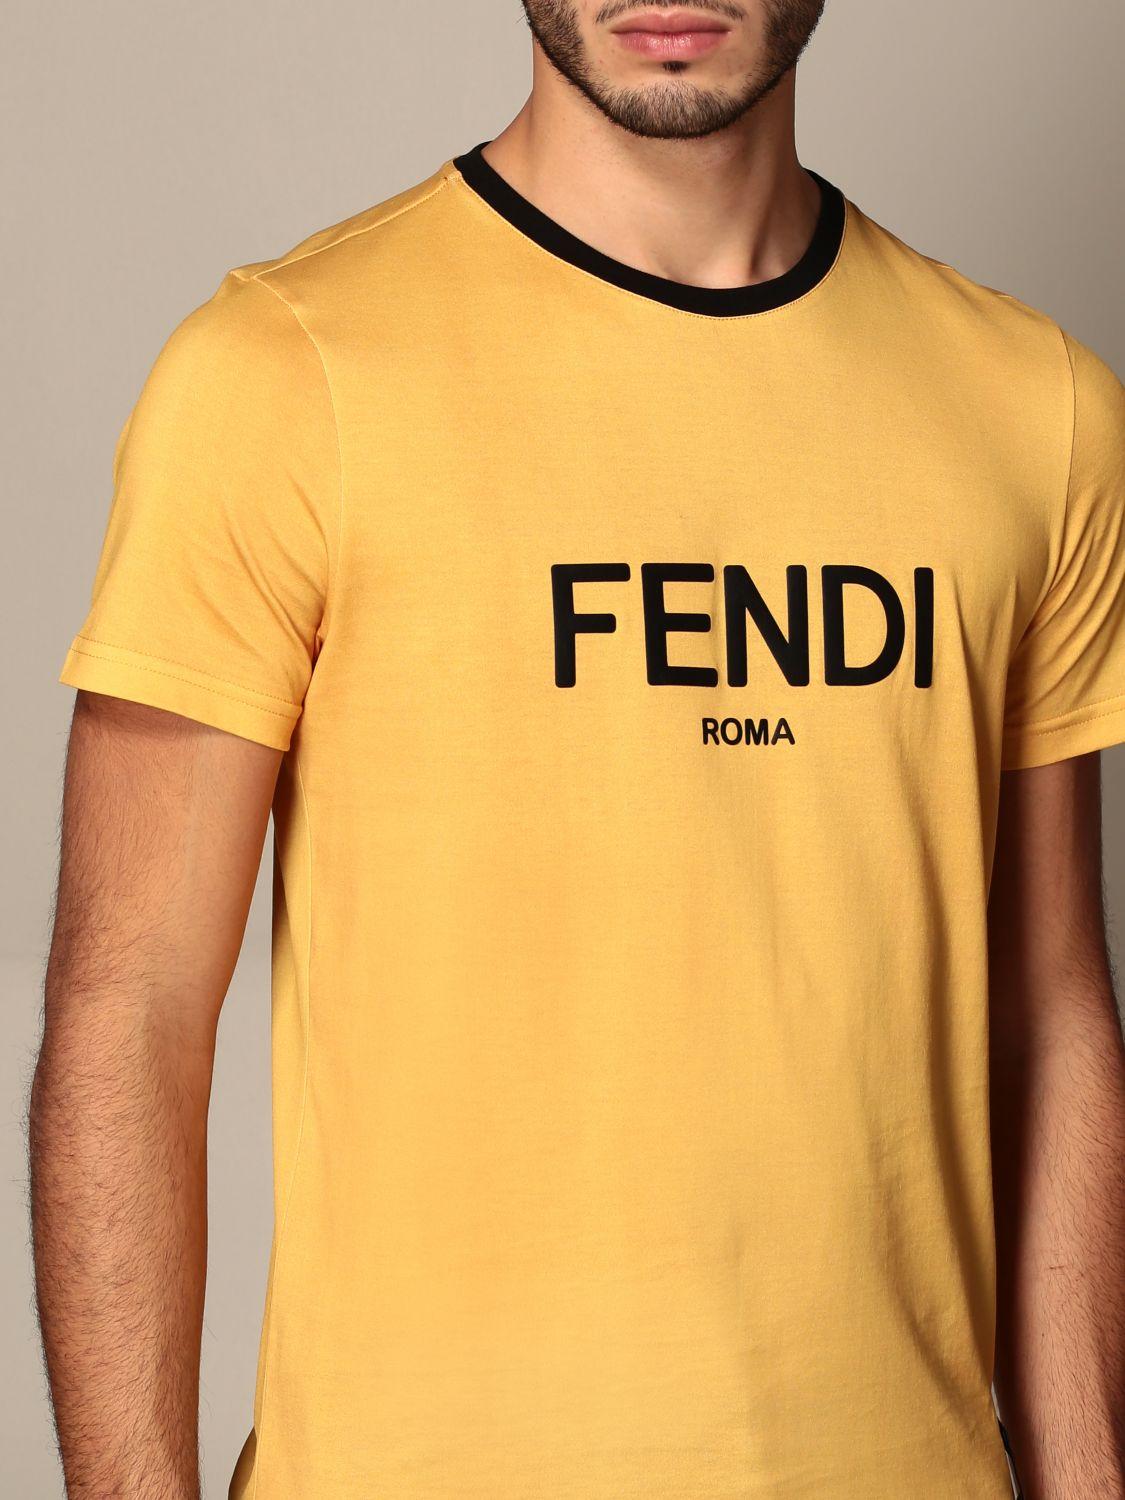 Fendi Cotton T-shirt in Yellow for Men | Lyst